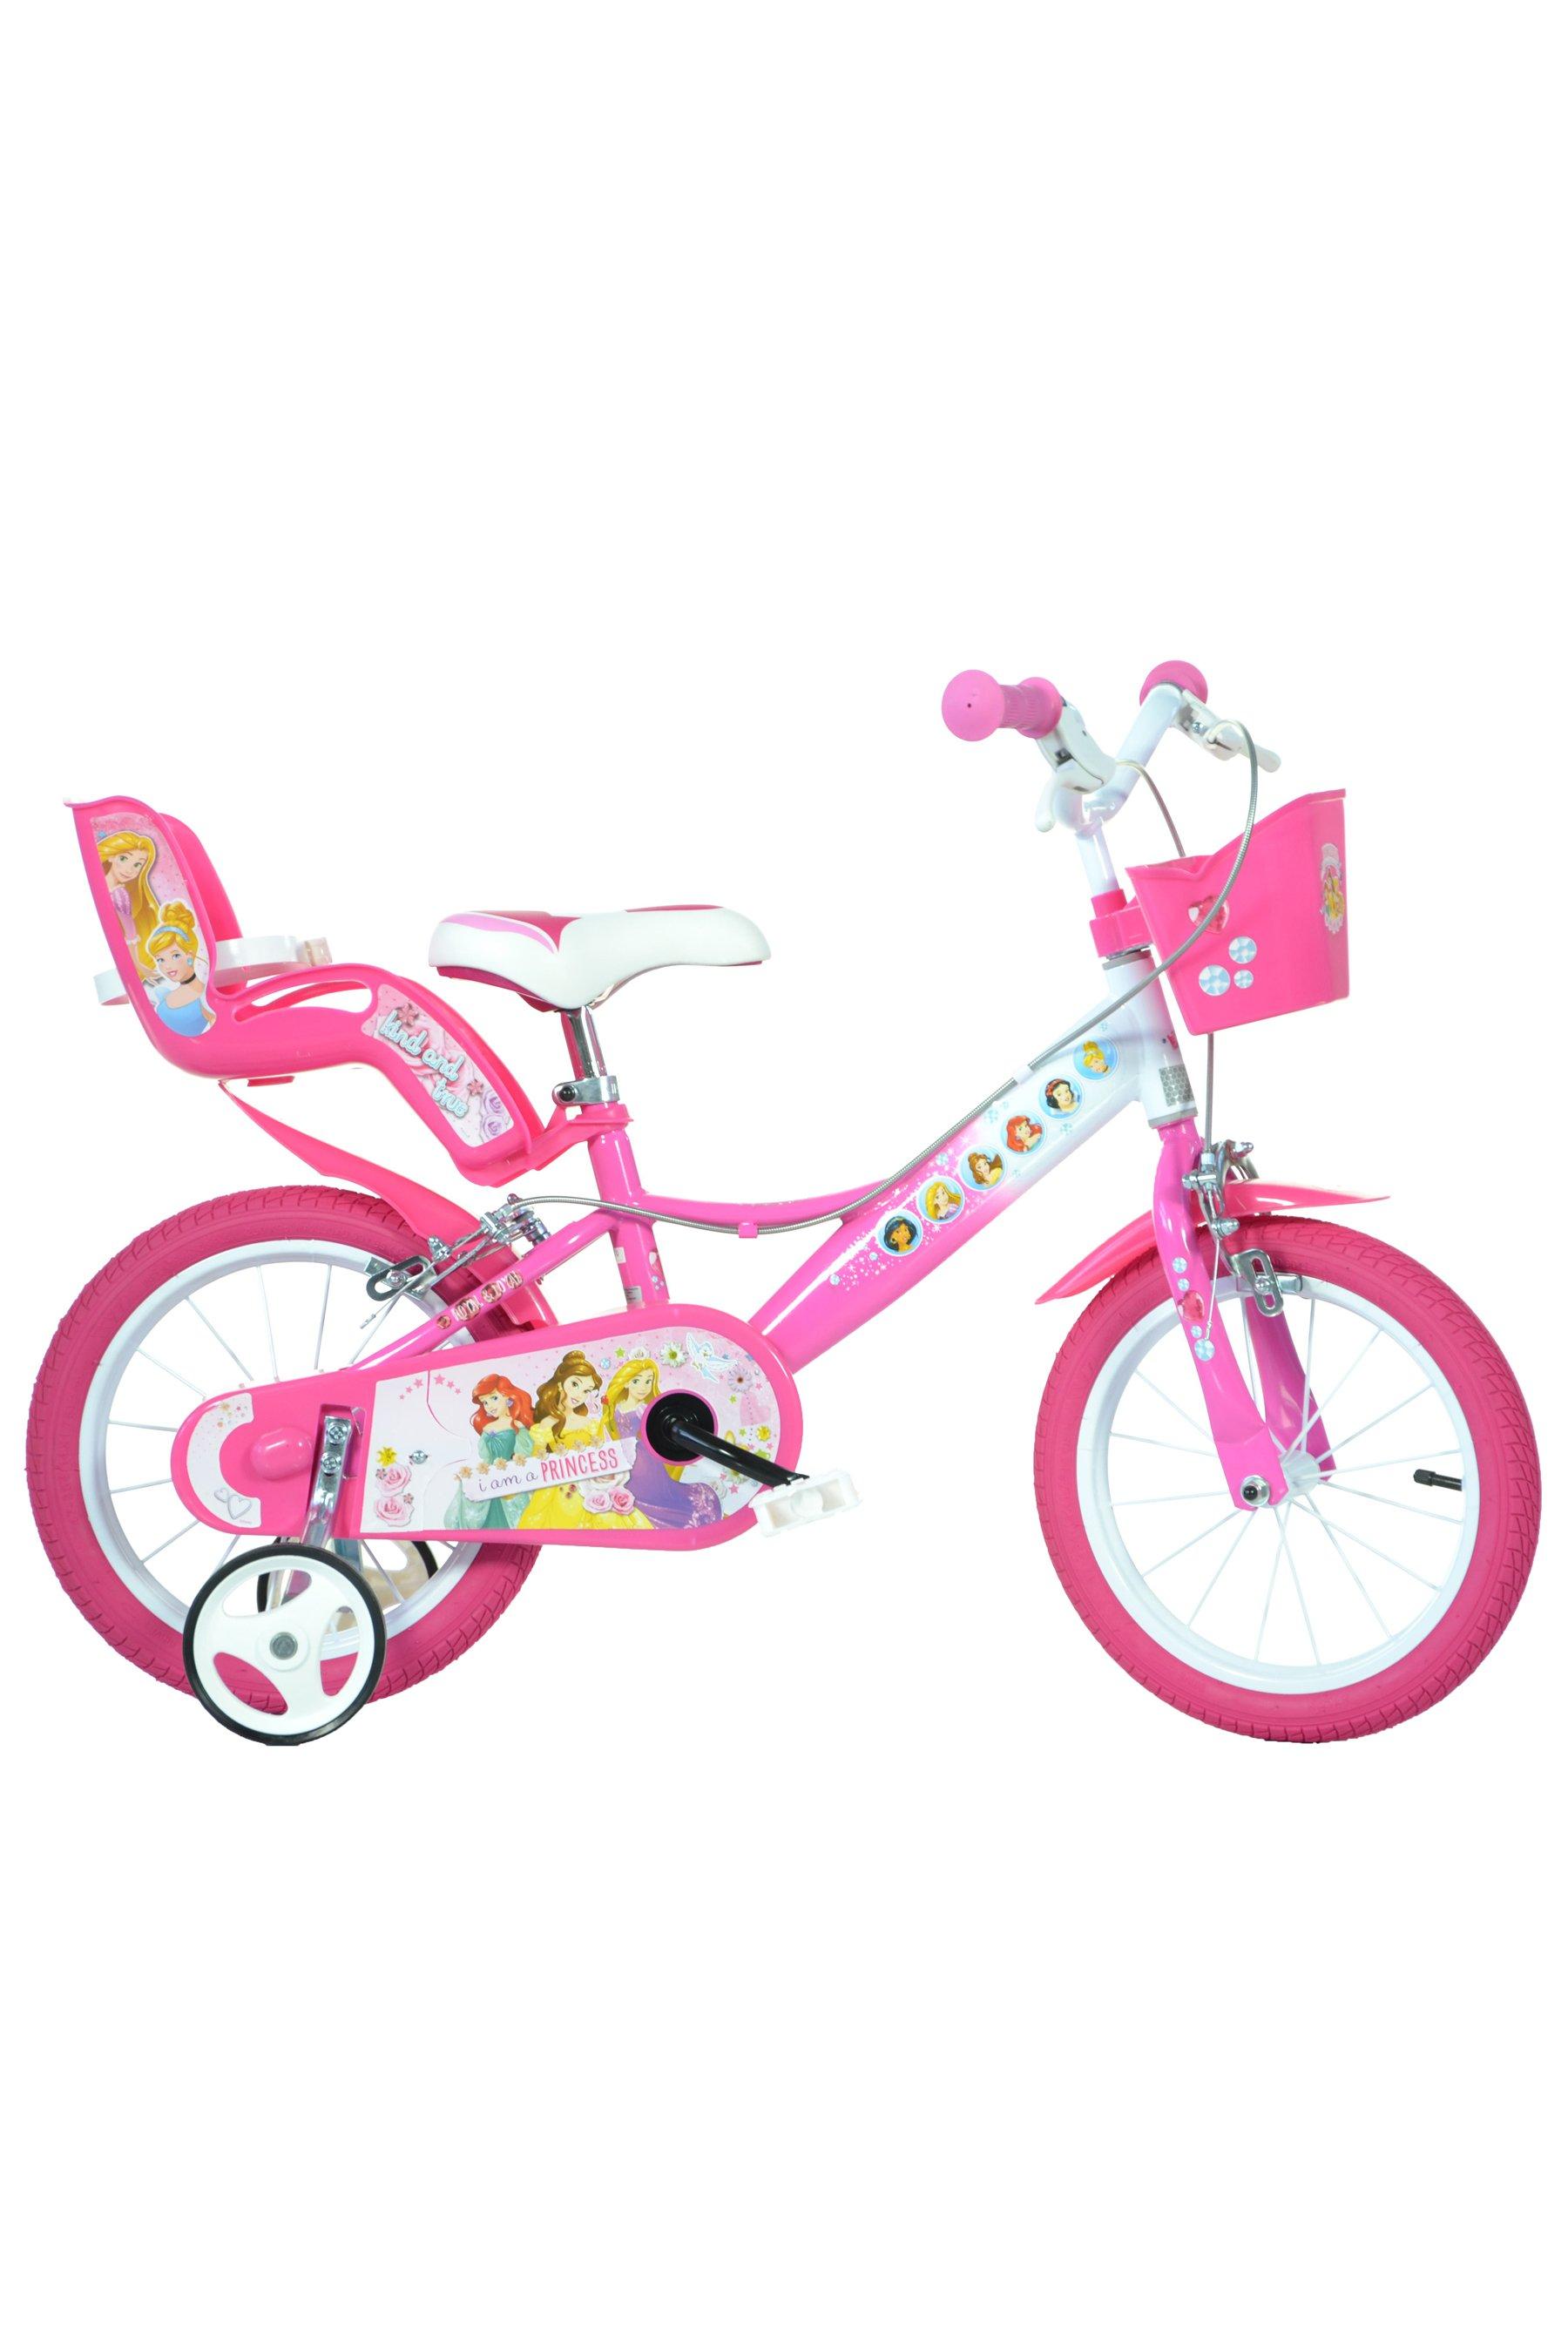 disney princess bicycle - size: 16"